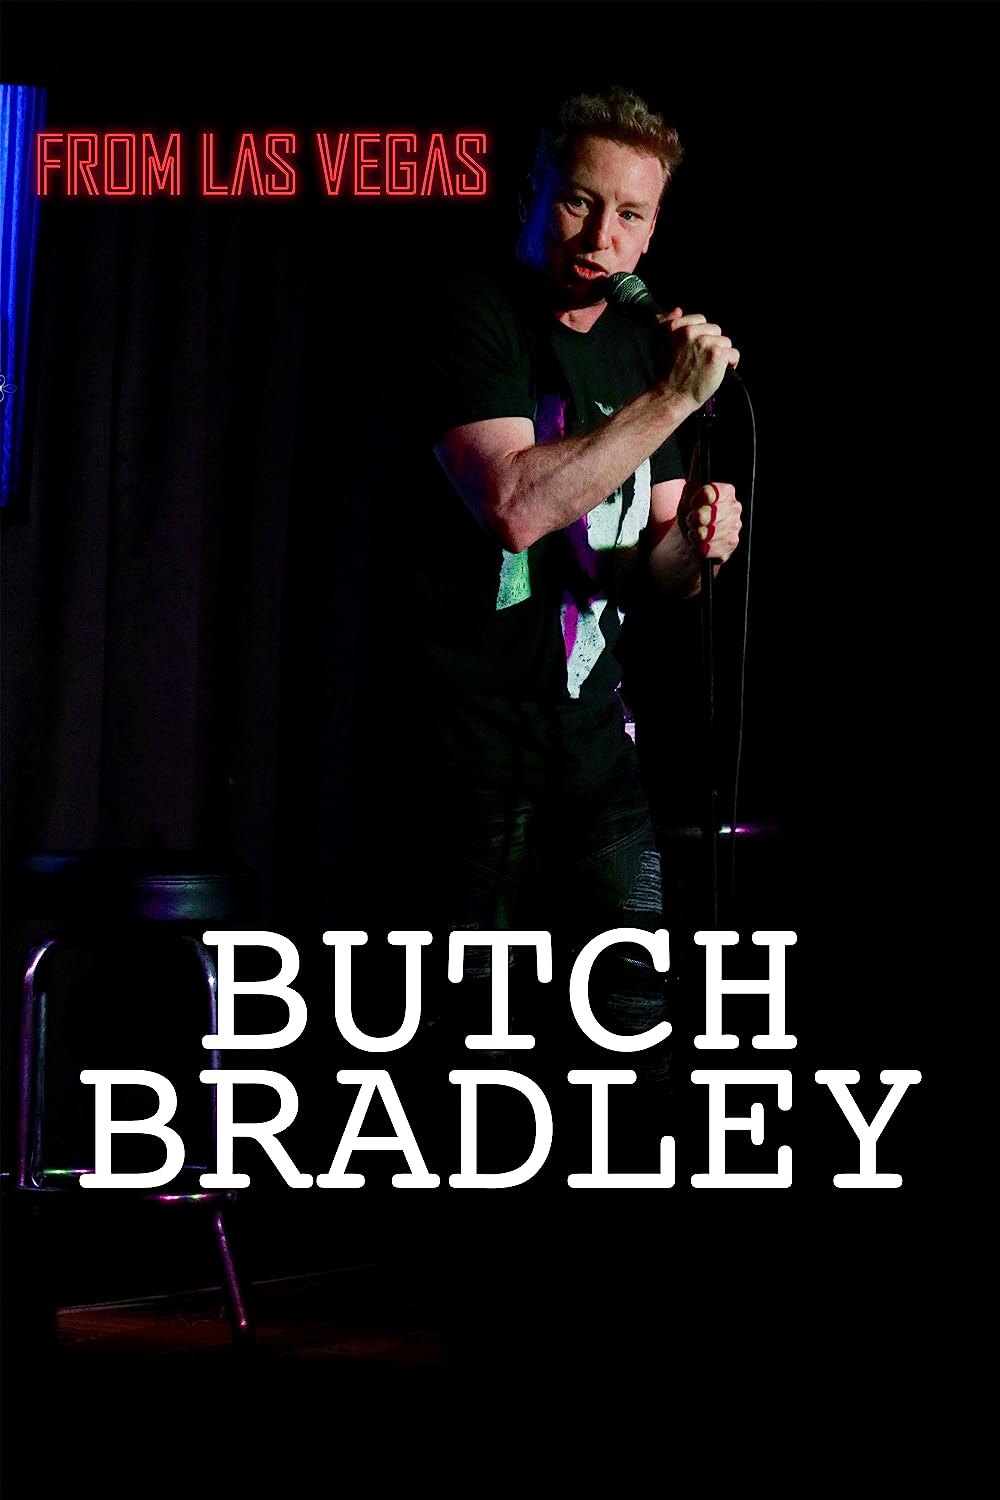     Butch Bradley: From Las Vegas